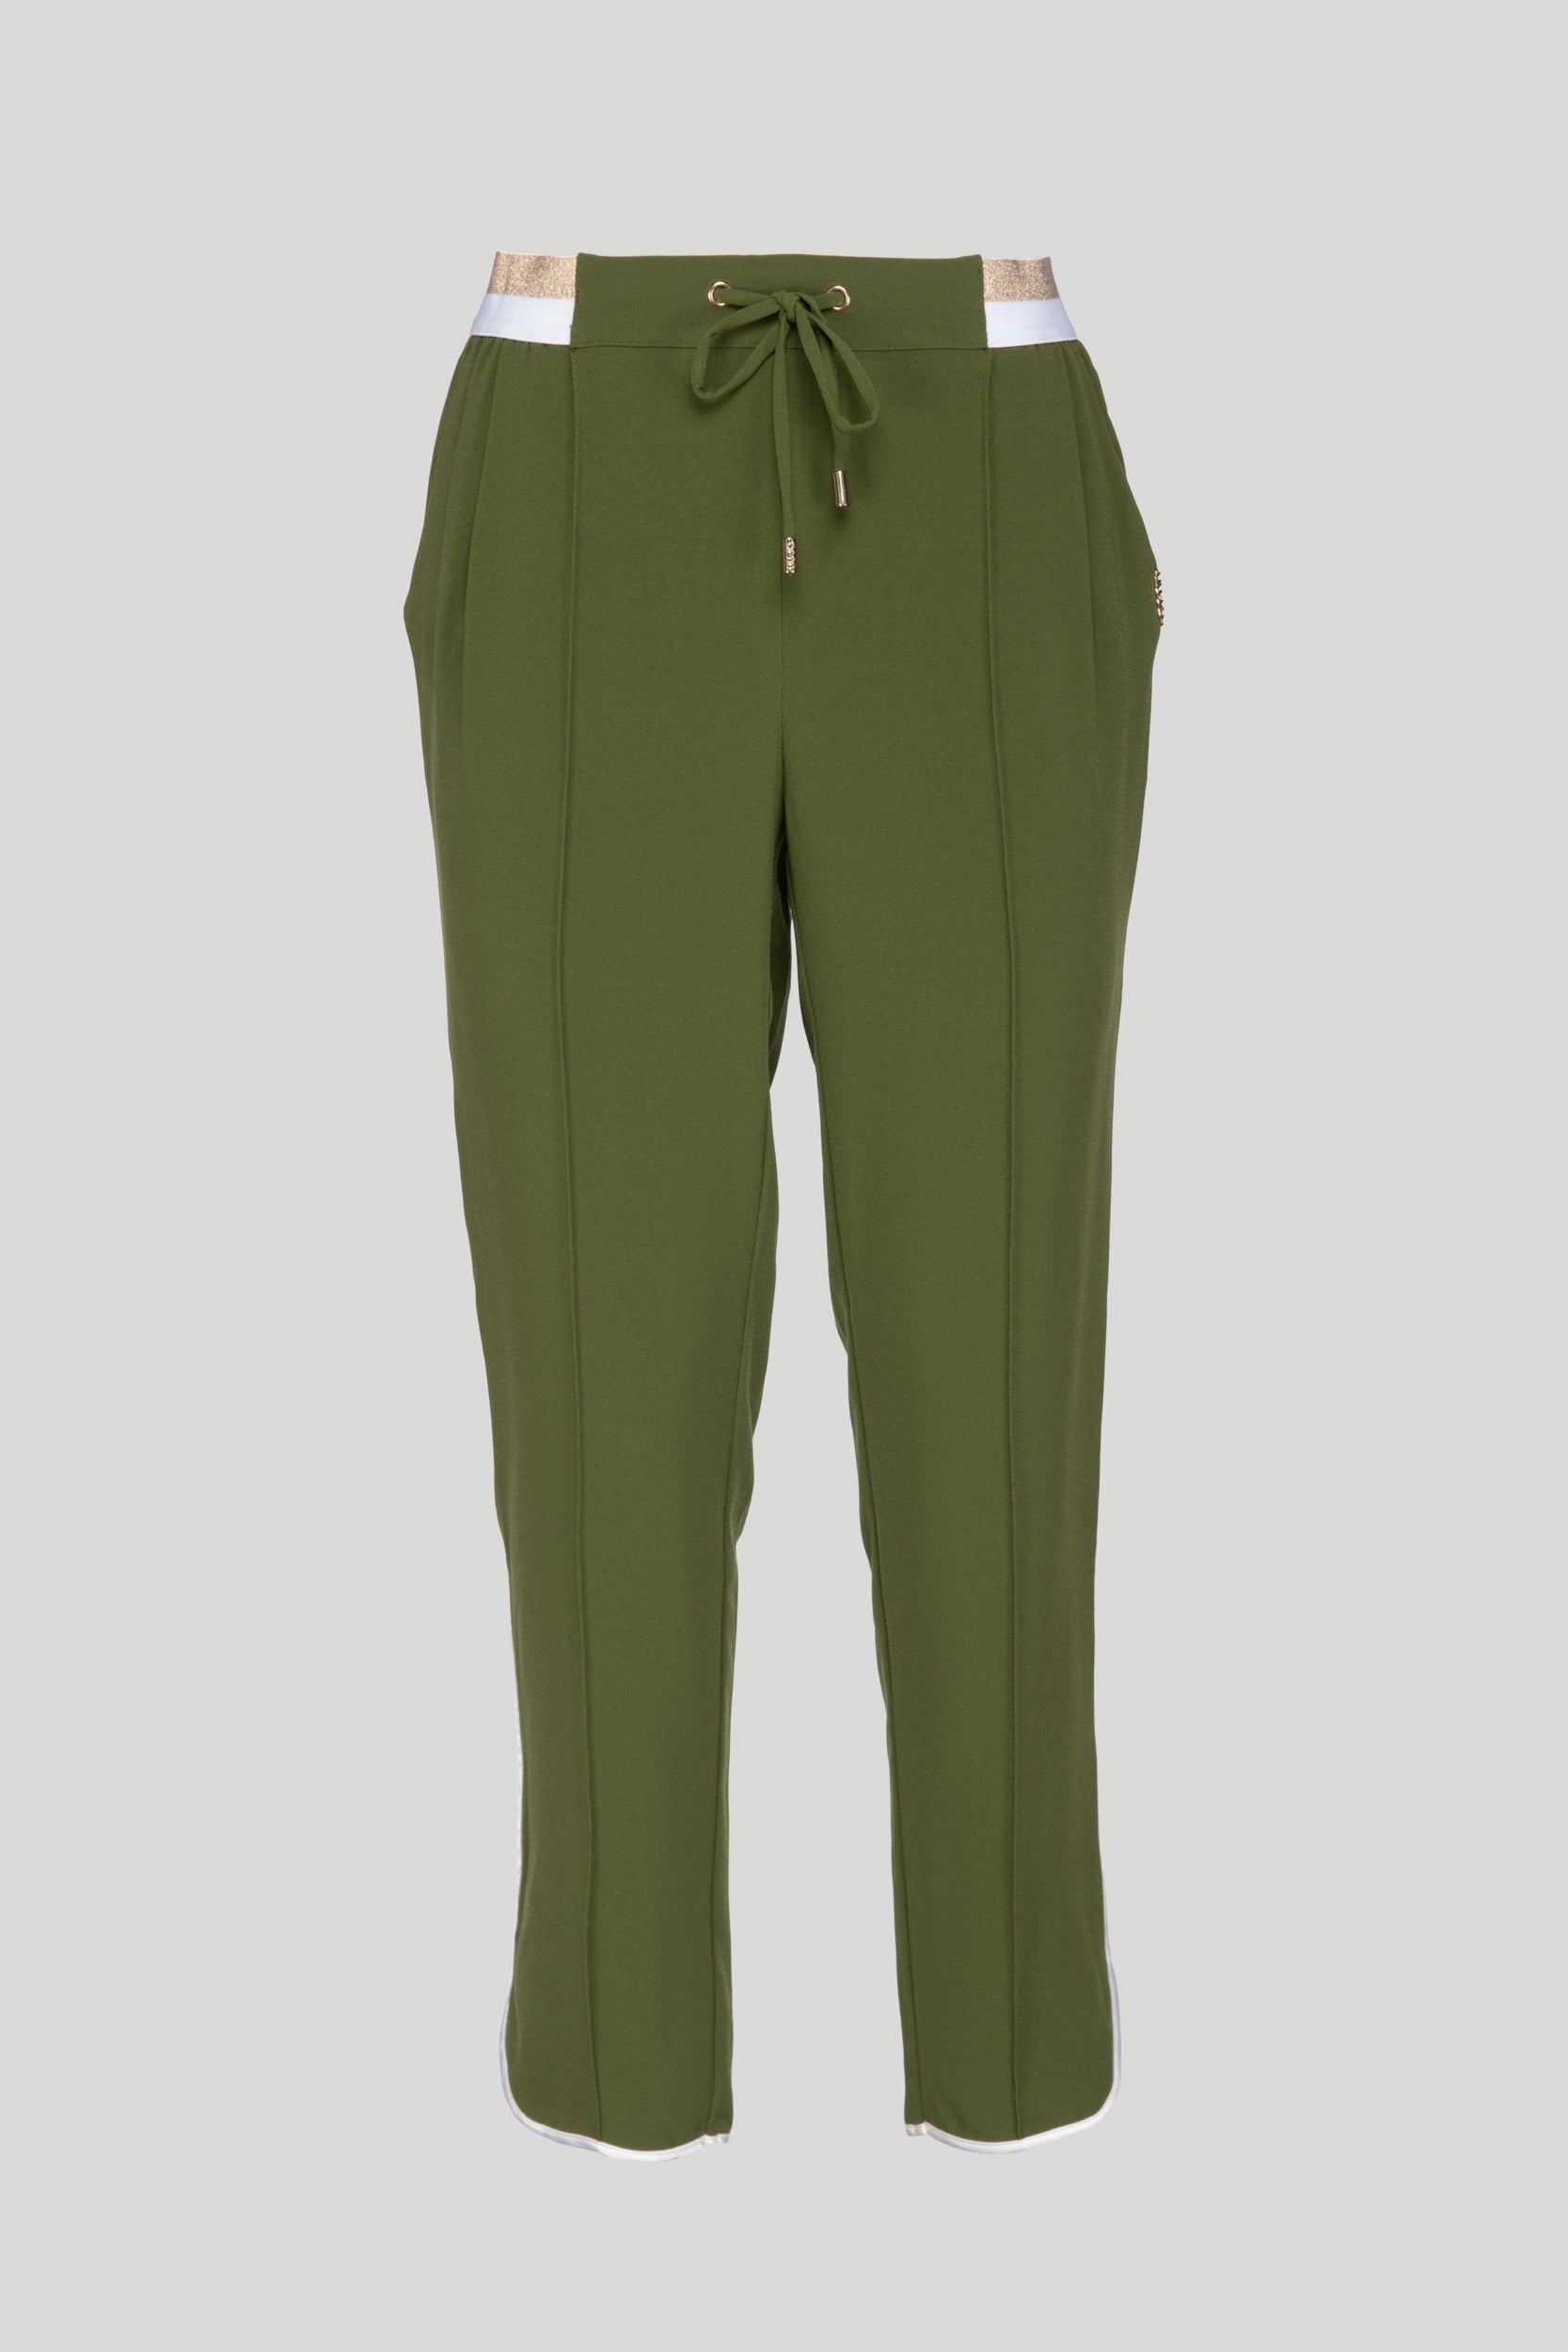 LIU JO Pantalone Verde Militare